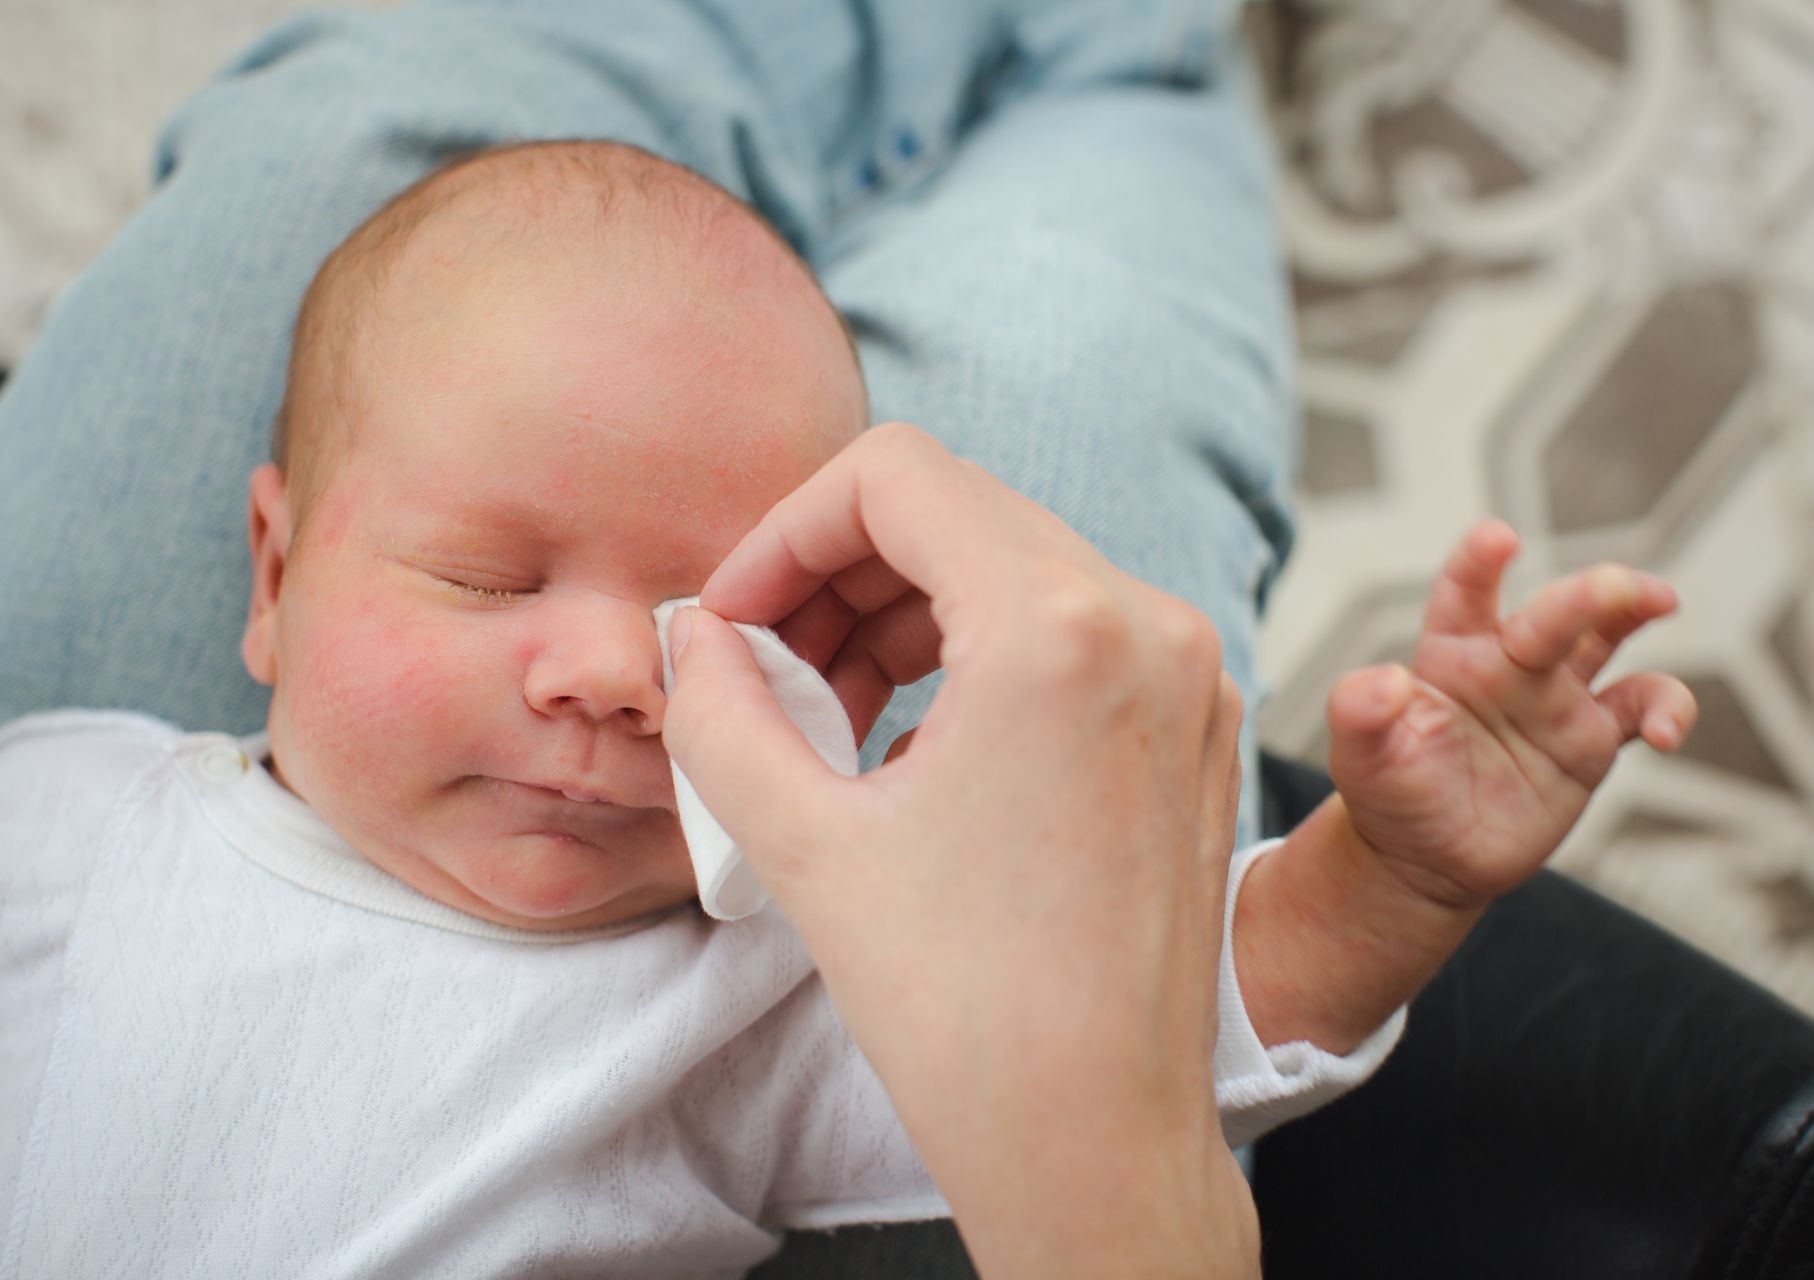 Oftalmologia Pediátrica: devo limpar os olhos do bebê?